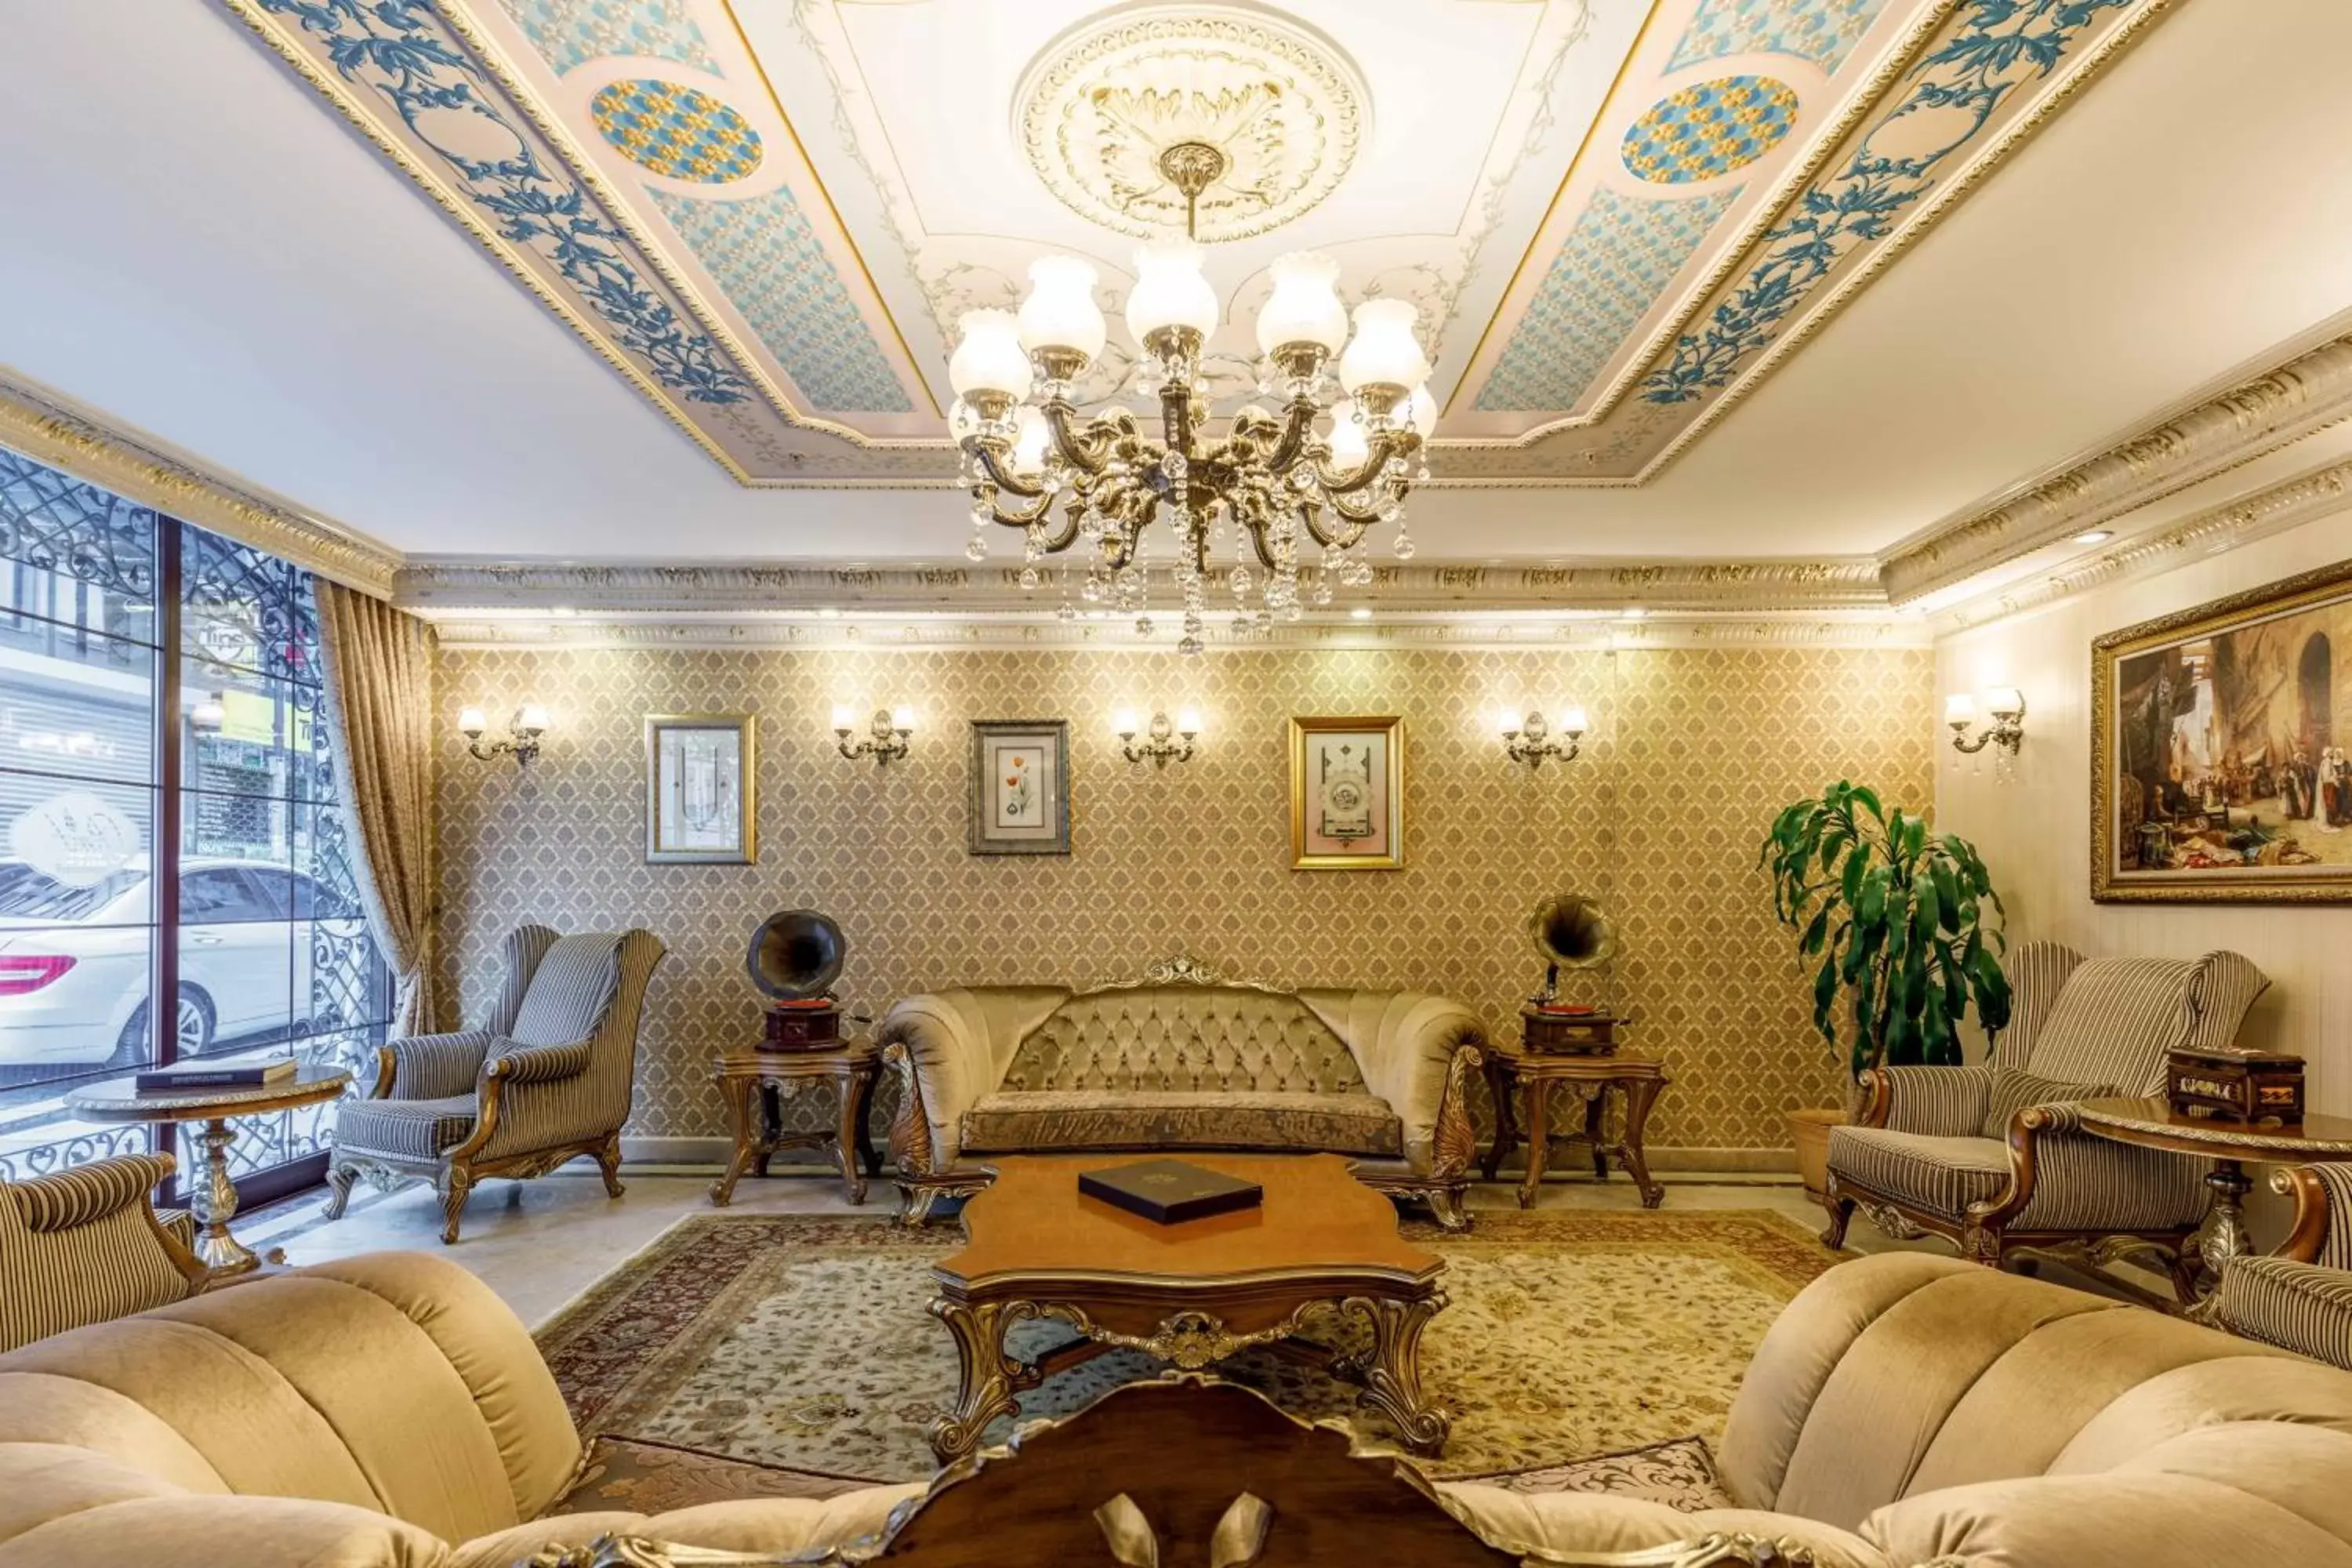 Lobby or reception in Rast Hotel Sultanahmet